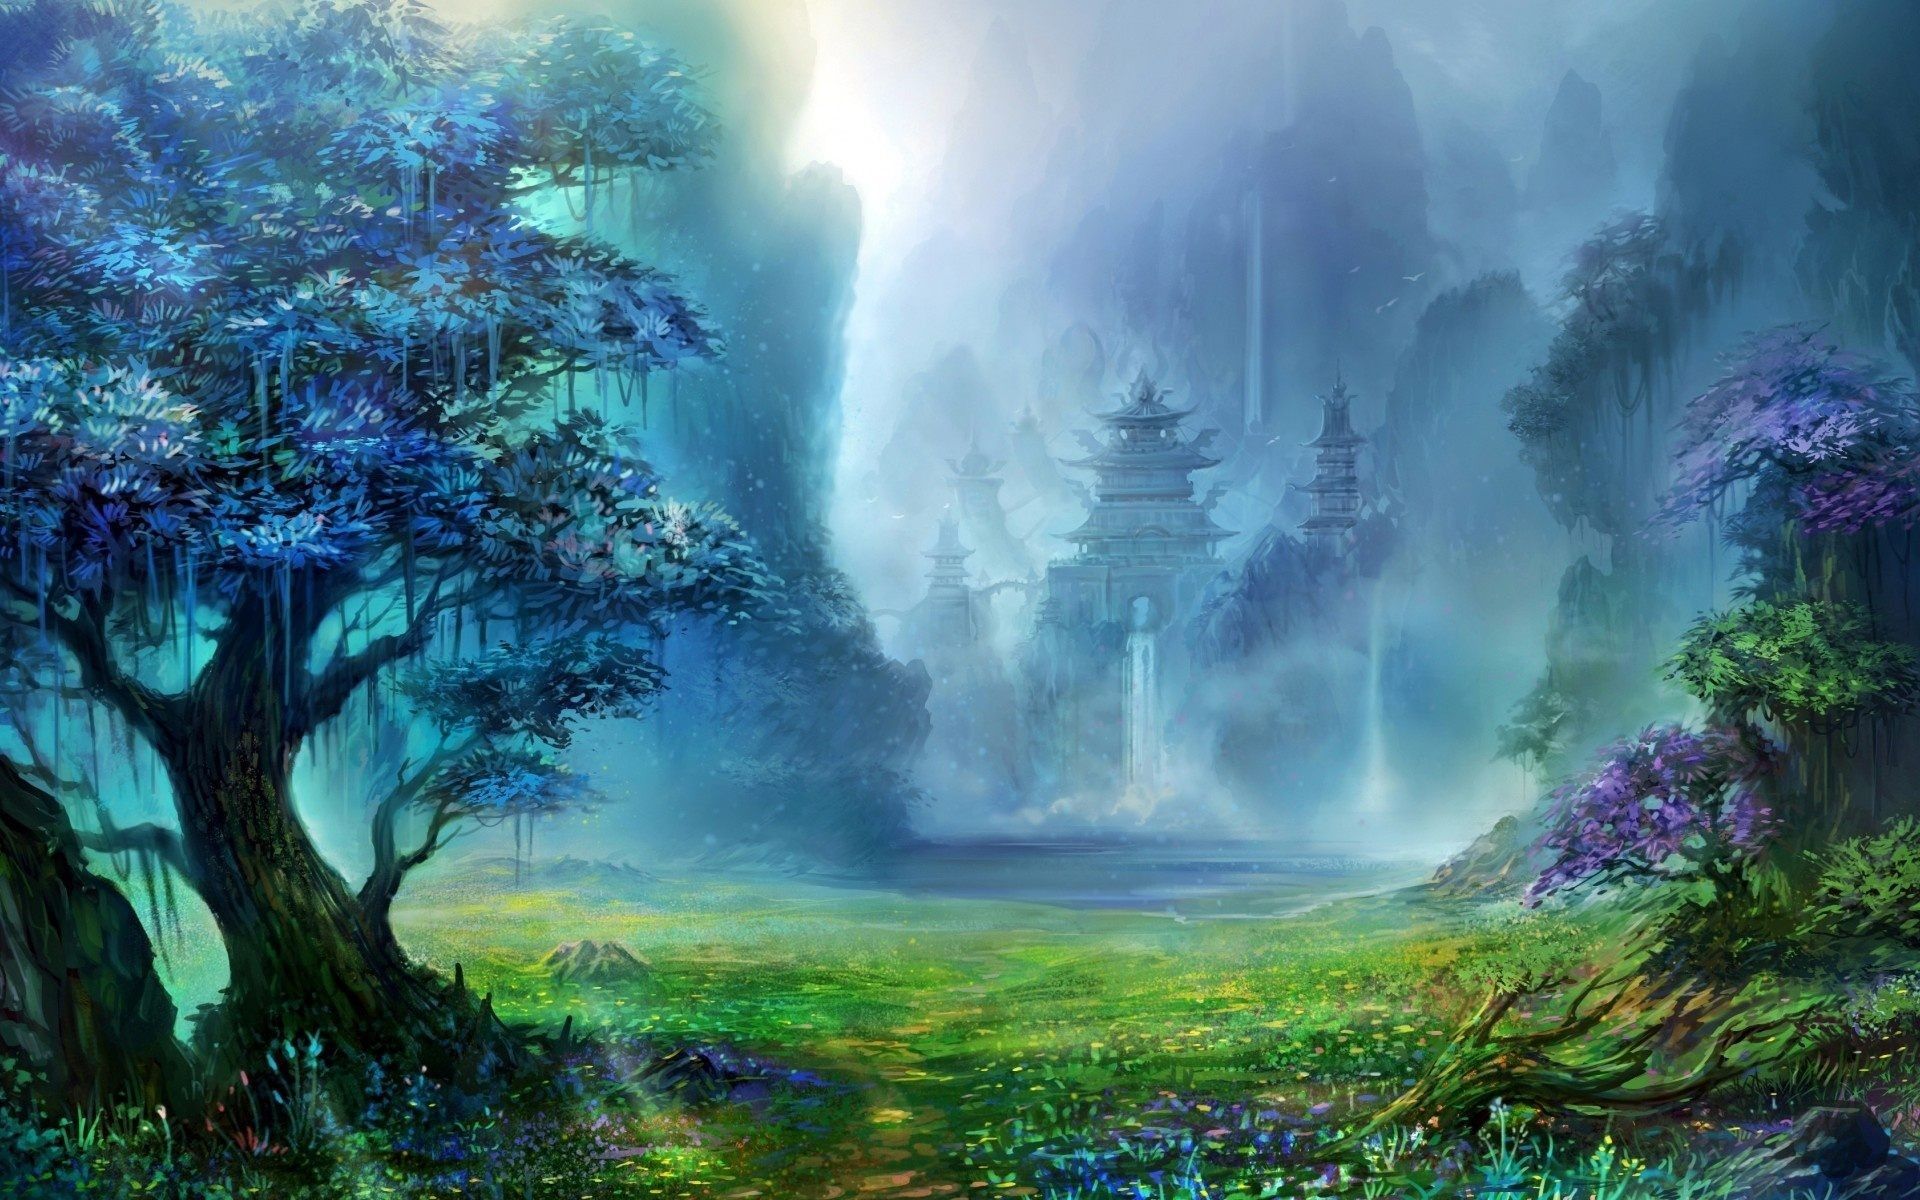 Fantasy Forest Painting Wallpaper For Desktop, PC & Mobile